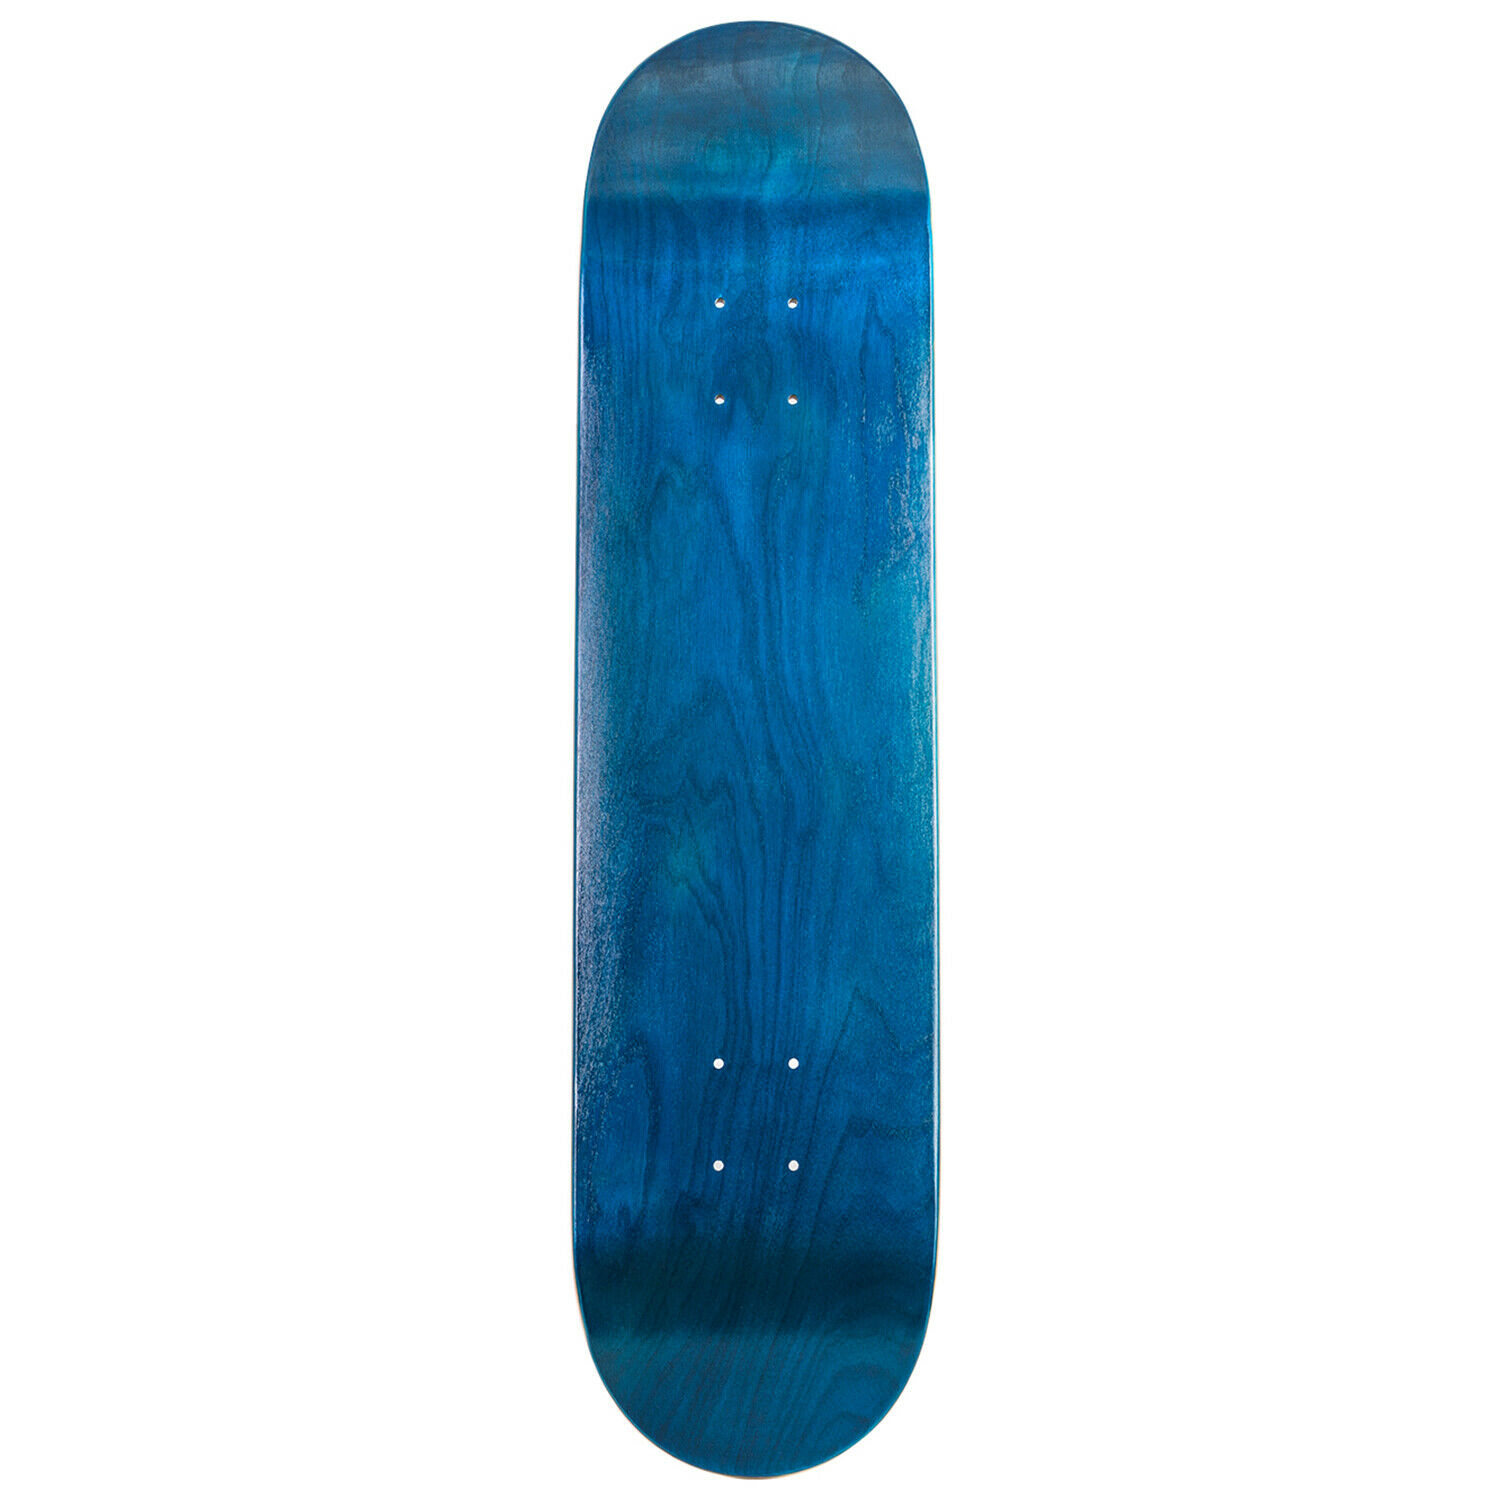 Cal 7 Blank Skateboard 2 Sides Blue Deck 8.25 Inch Maple Skate Board Wood Parts